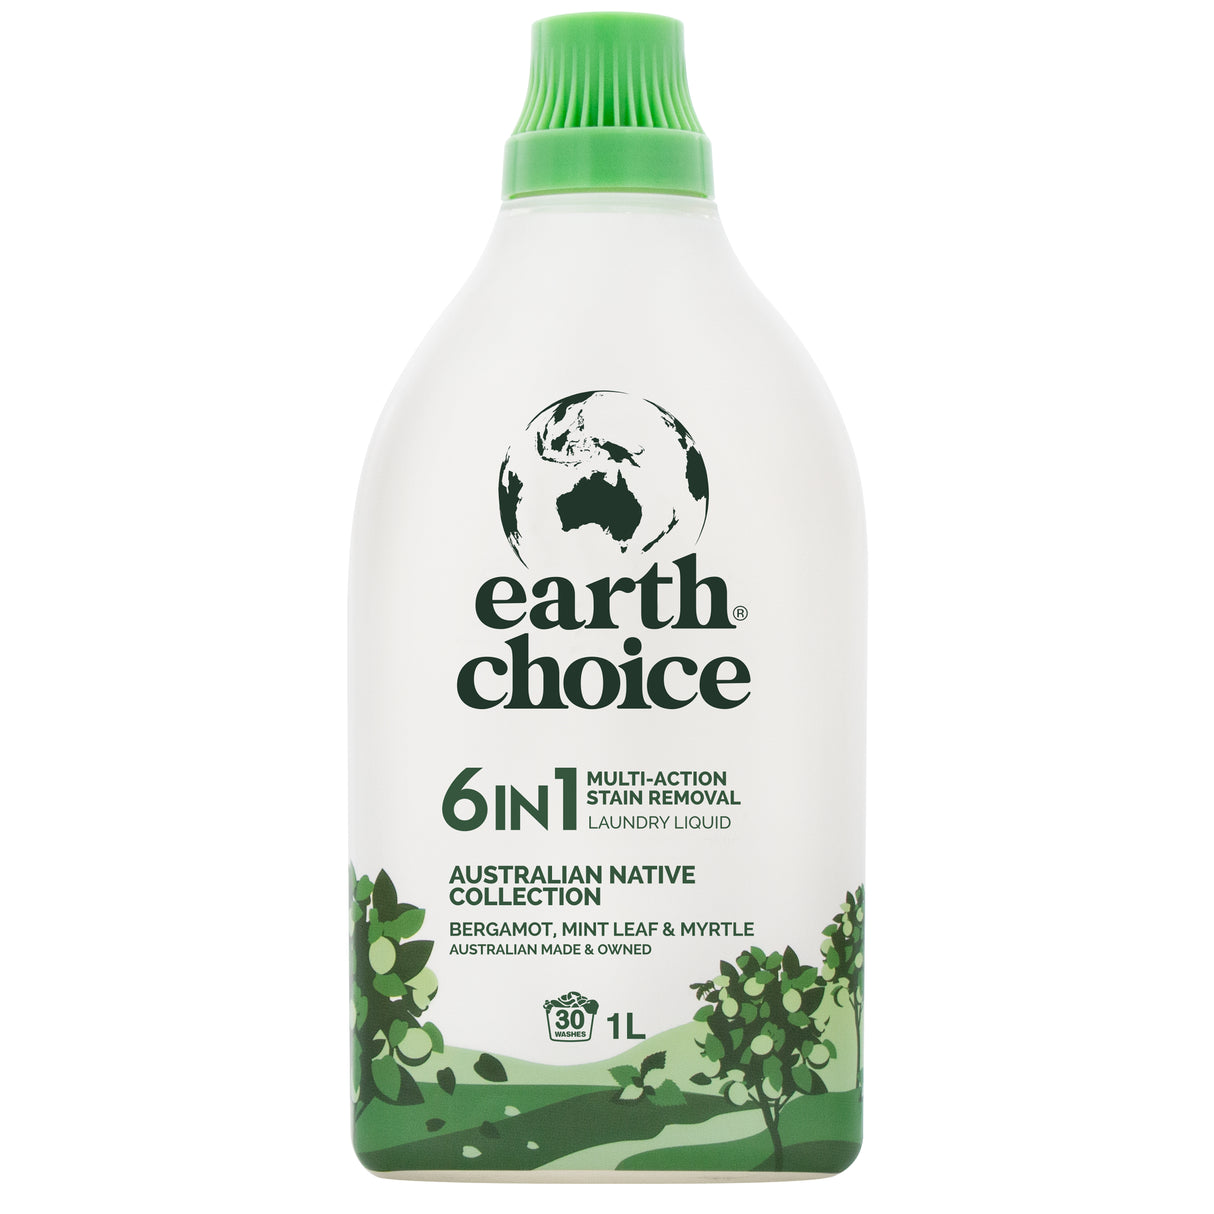 Earth Choice 6in1 Laundry Liquid Bergamot, Mint Leaf & Myrtle 1L